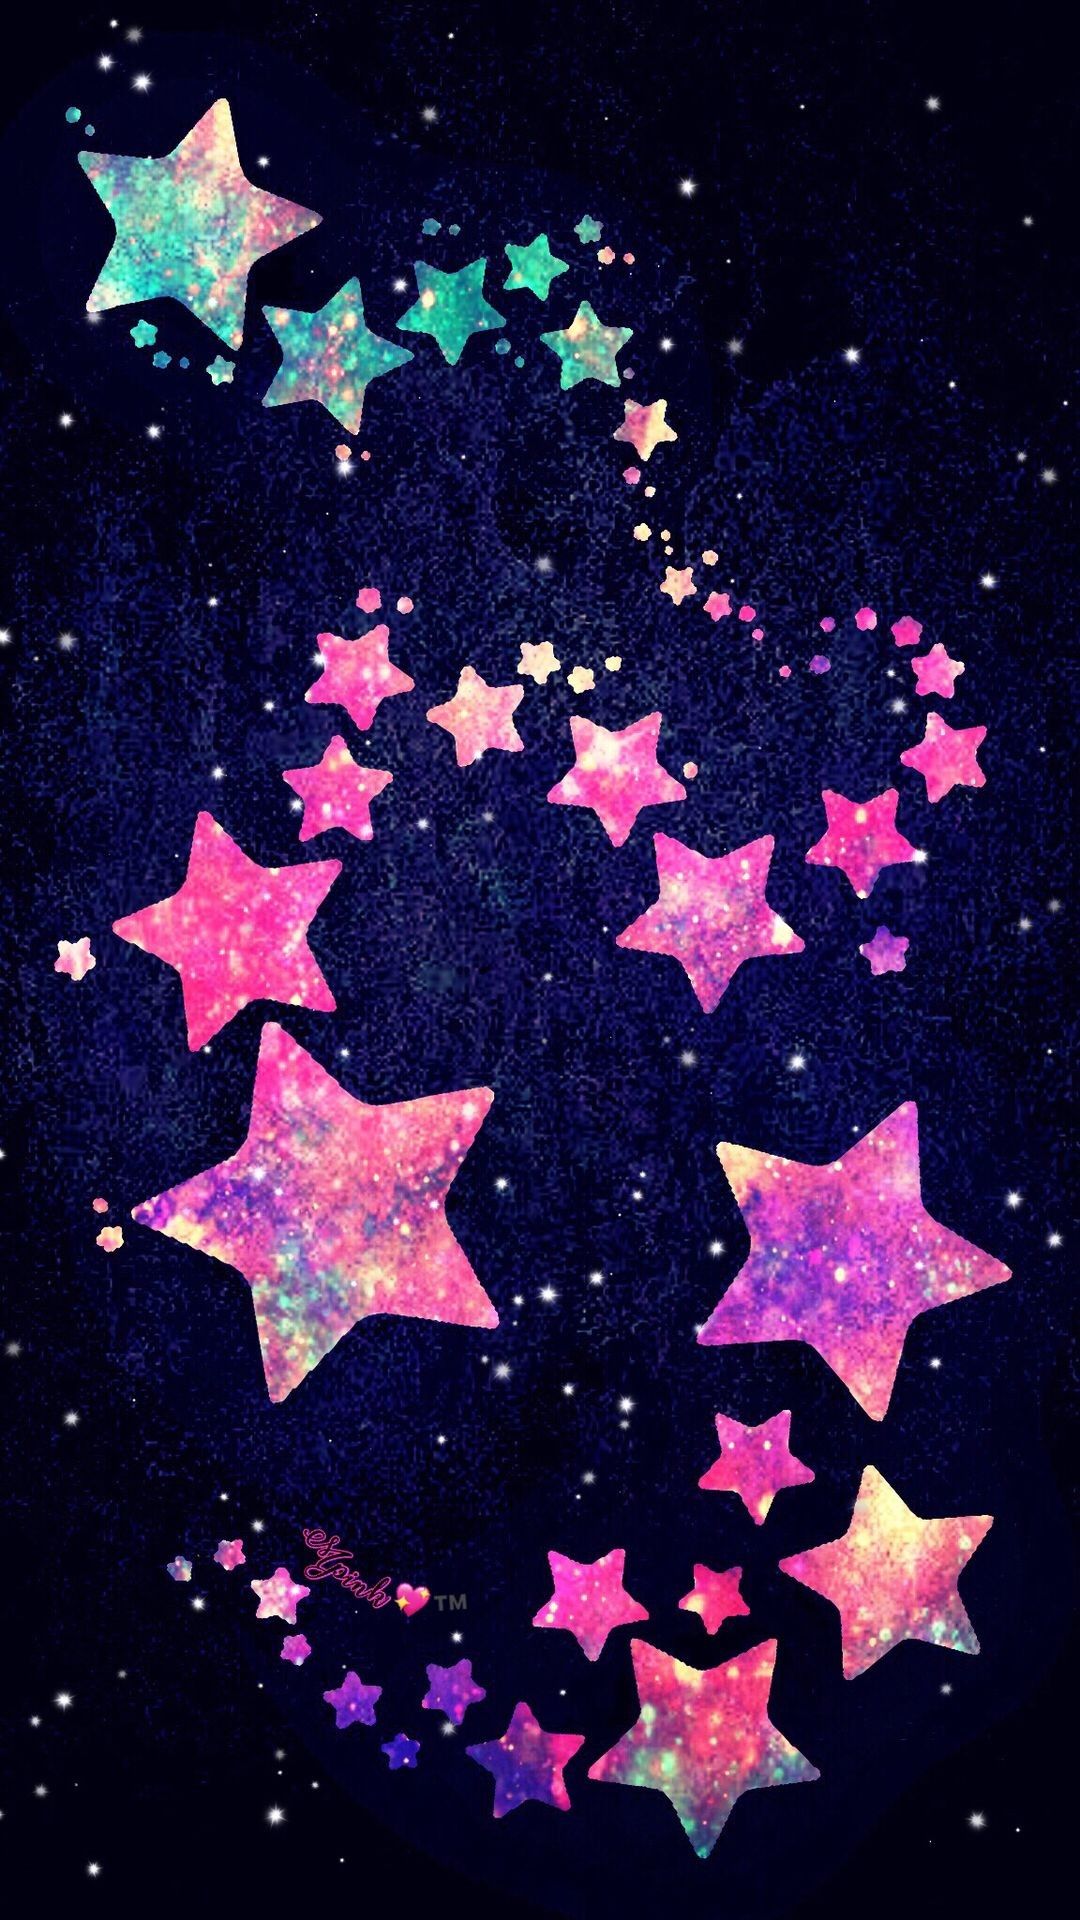 Space Glitter Stars Glare Nebula Galaxy HD Galaxy Wallpapers  HD Wallpapers   ID 88416